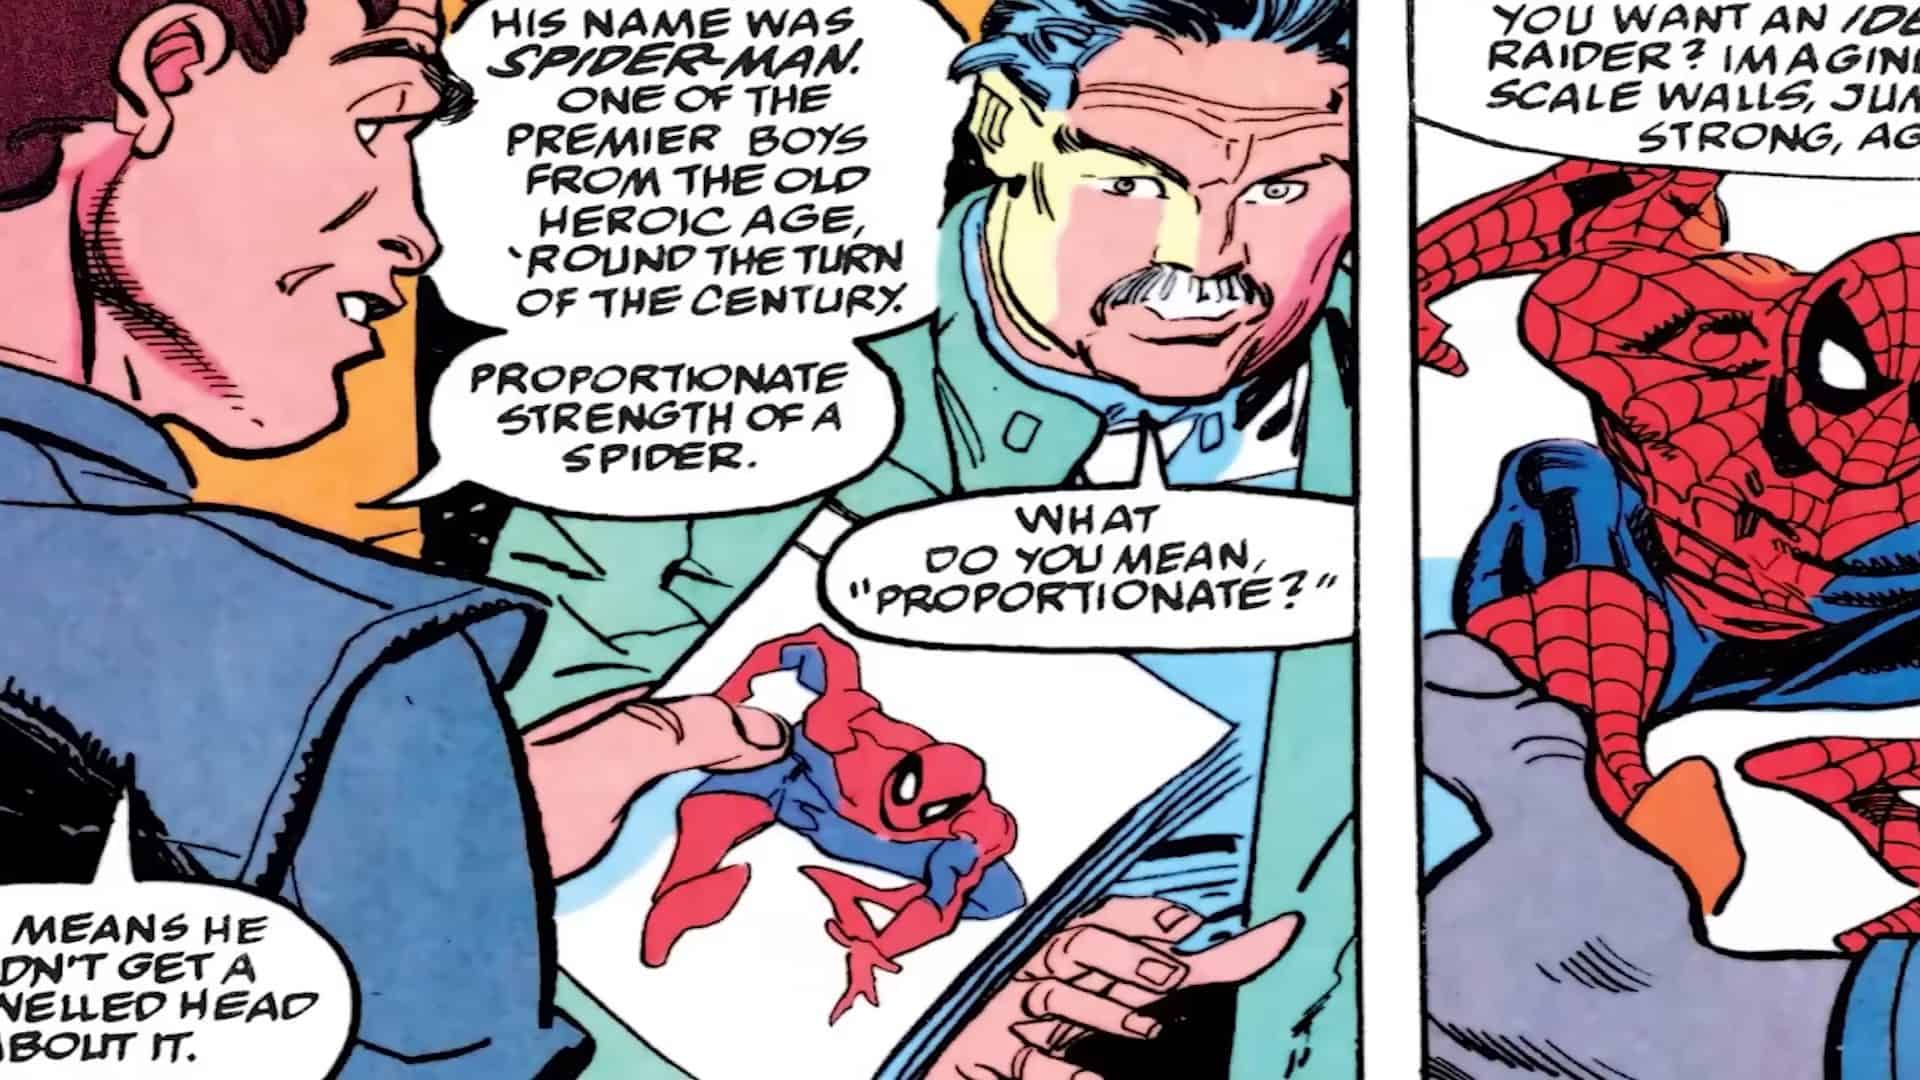 Migule was inspired by Spider-Man